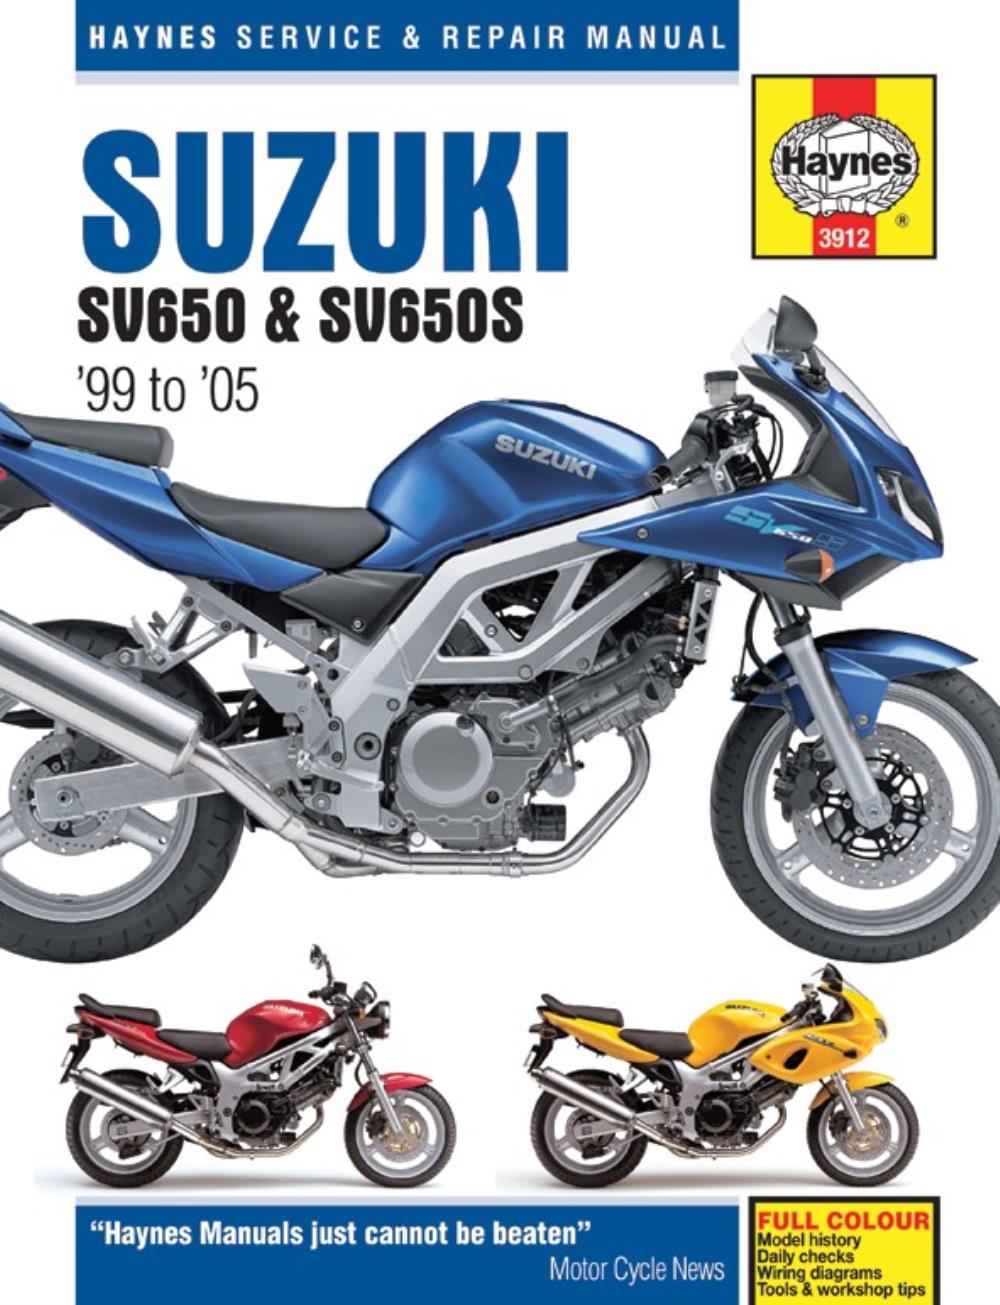 Manual Haynes for 2001 Suzuki SV 650 K1 (Naked/No ABS) eBay